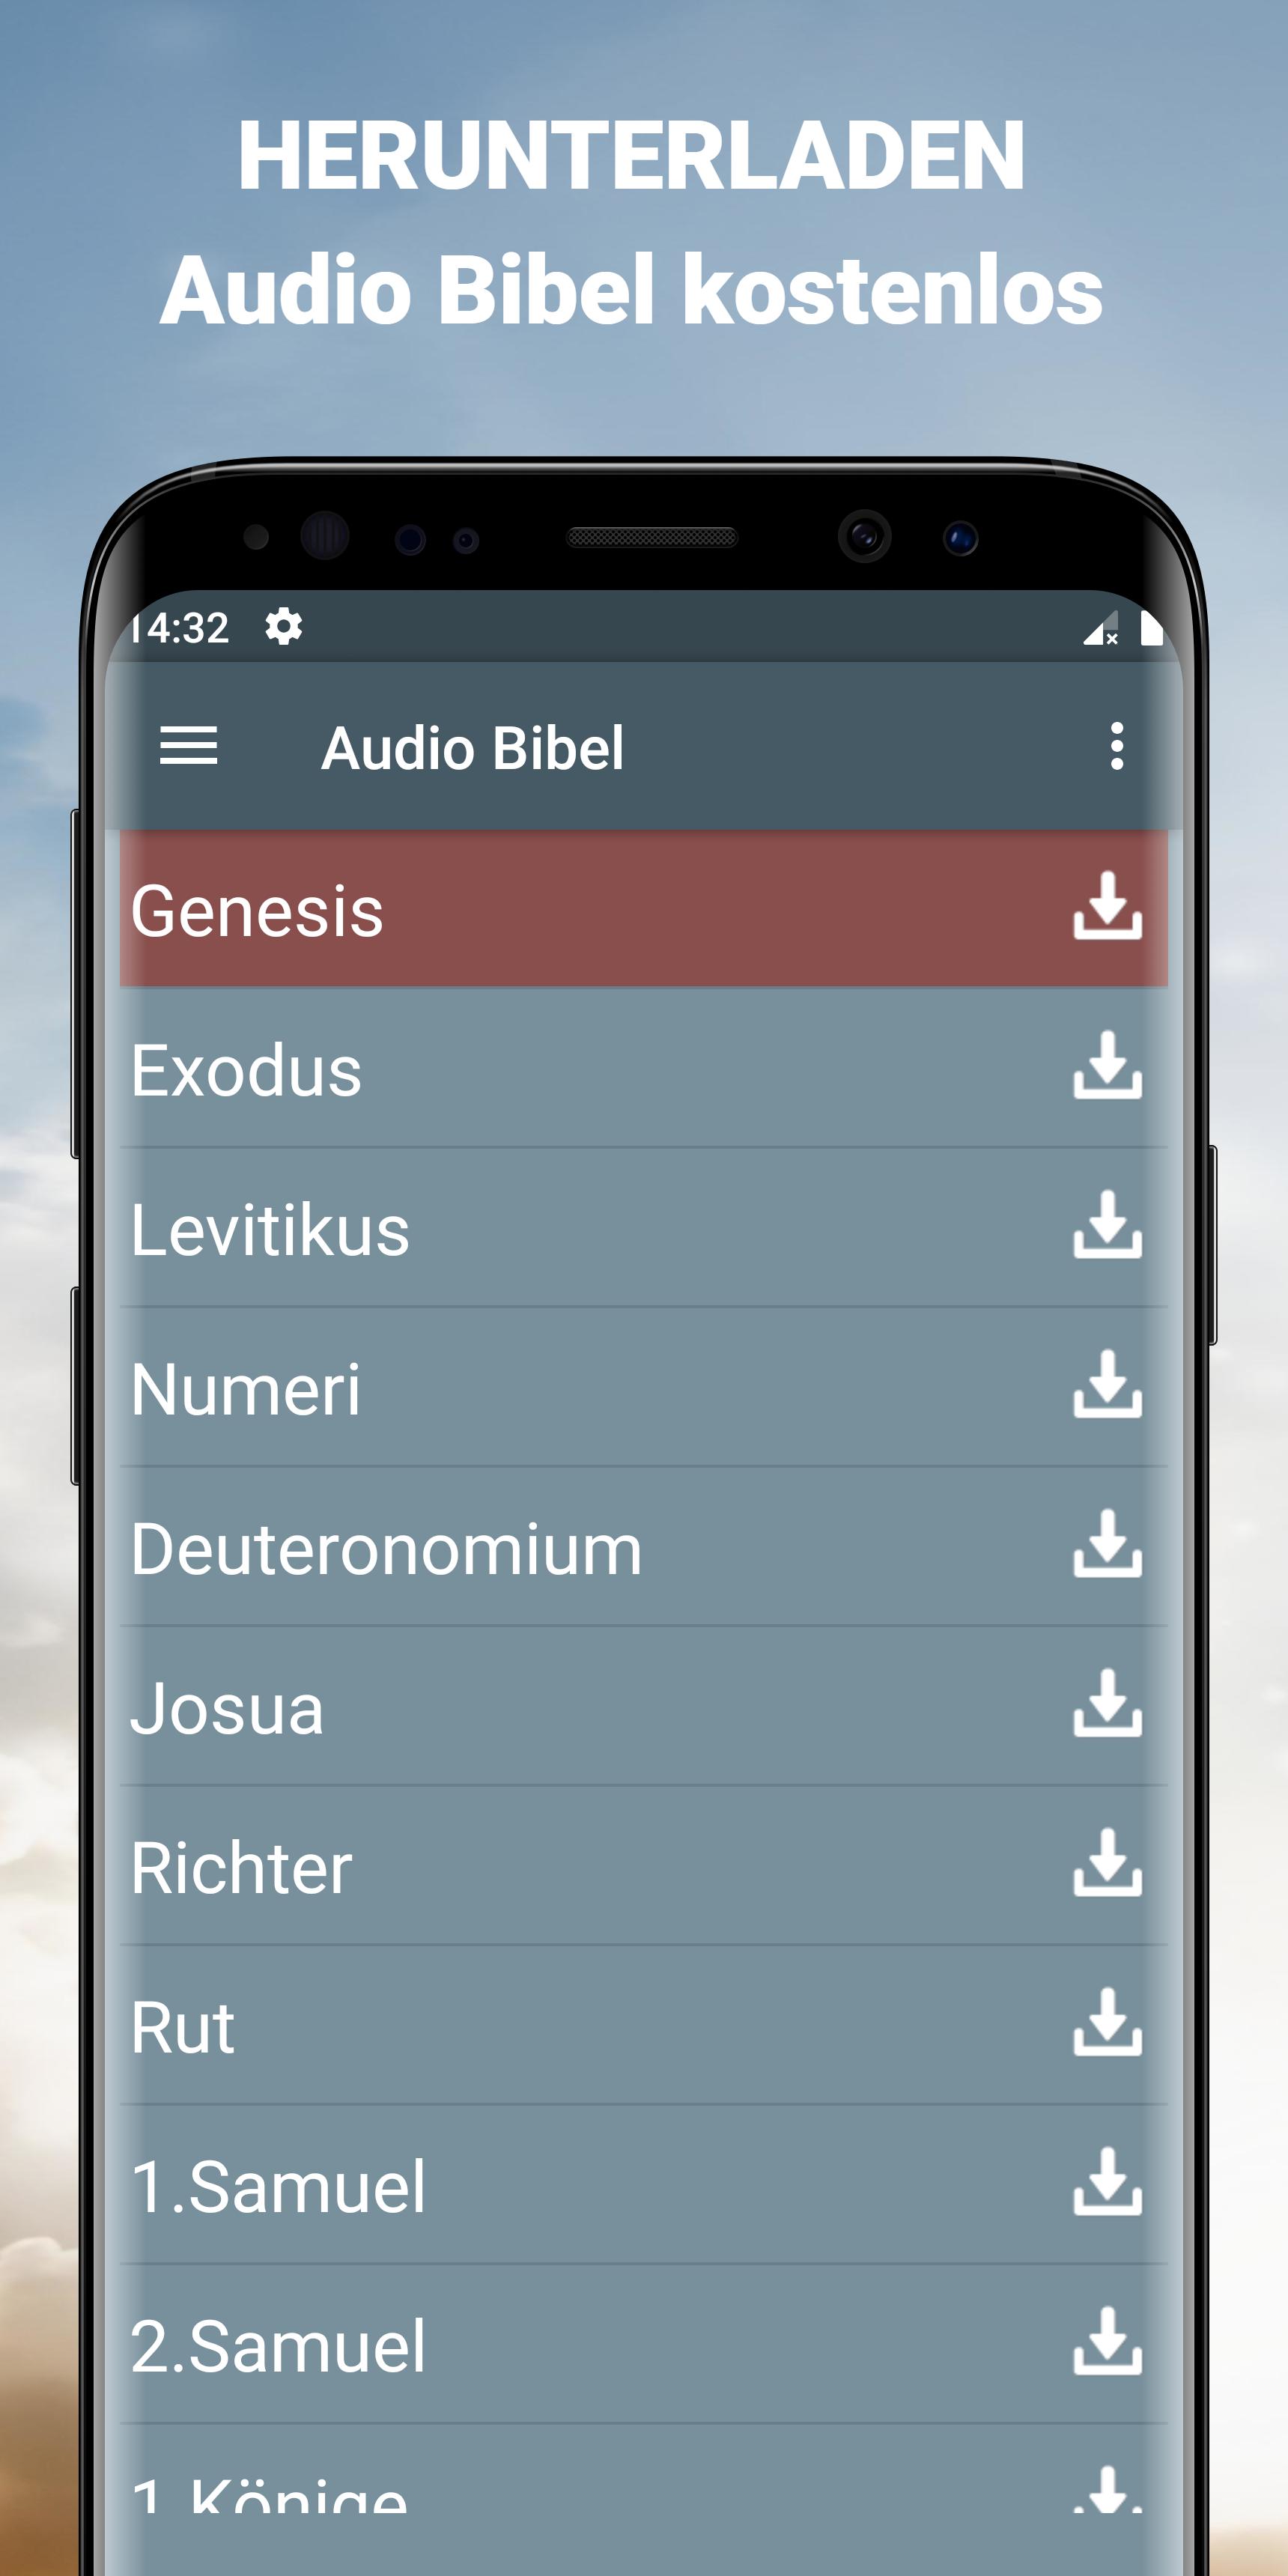 Audio Bibel for Android - APK Download